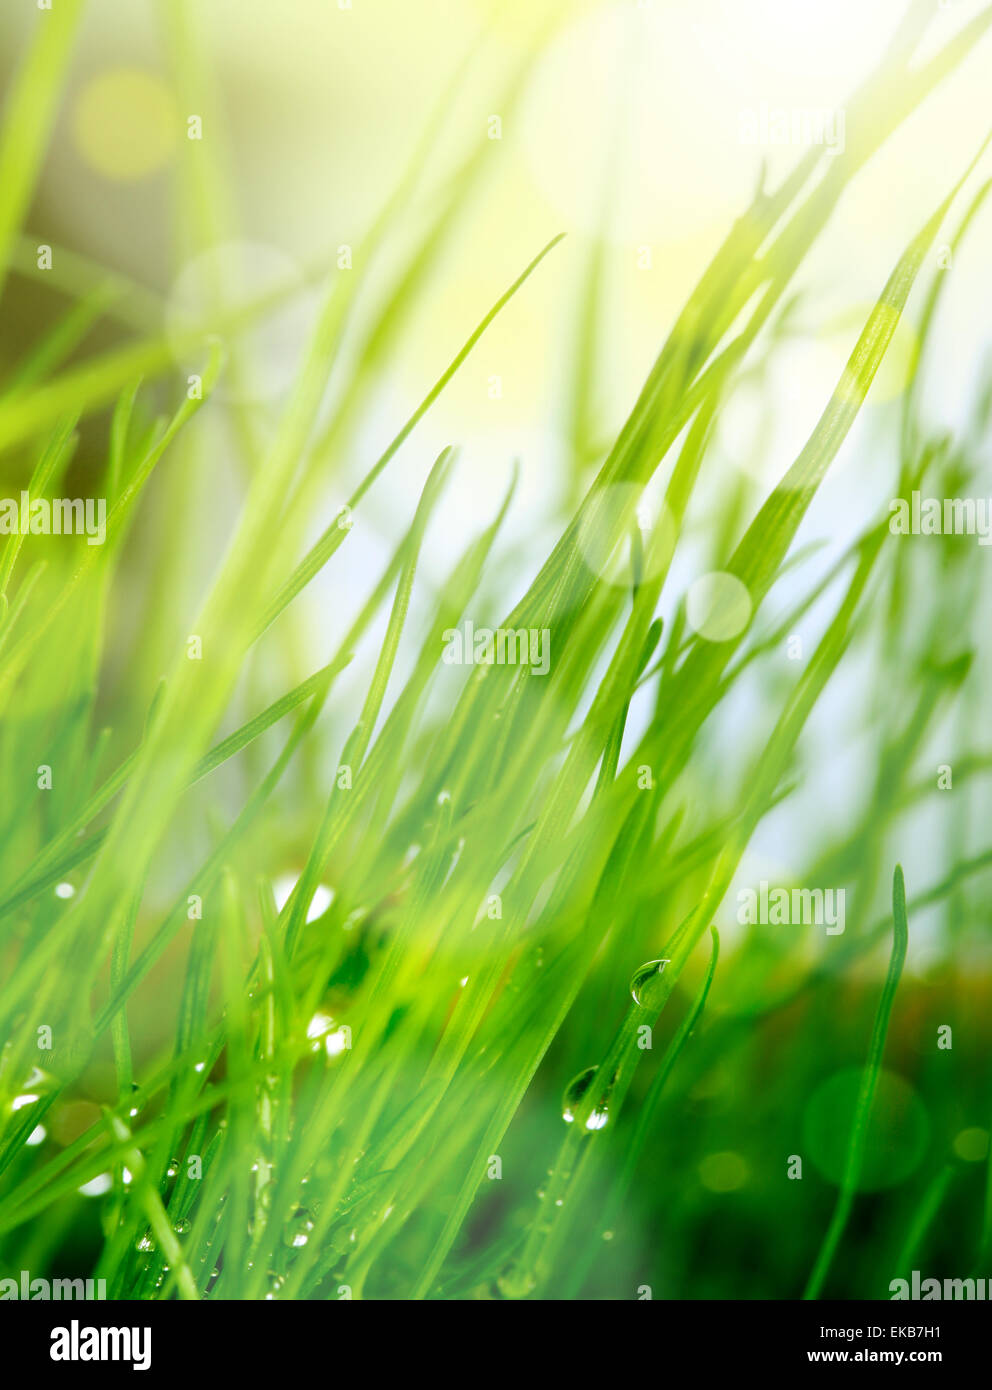 soft blur green grass background Stock Photo - Alamy